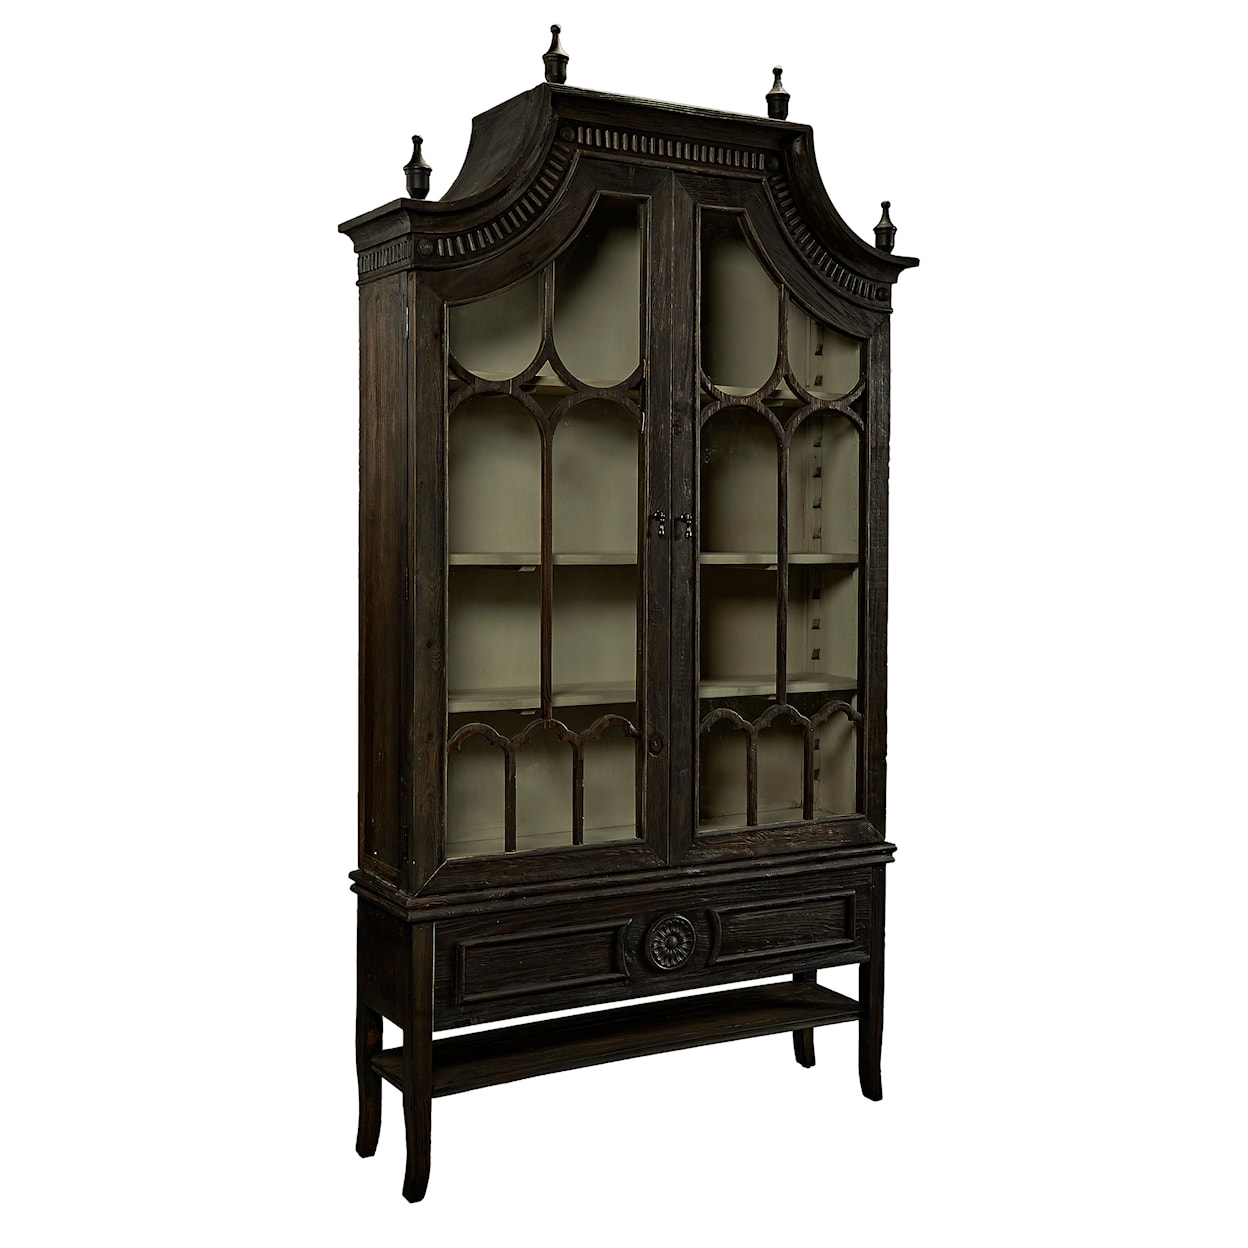 Furniture Classics Furniture Classics Reims Cathedral Black Arched Cabinet